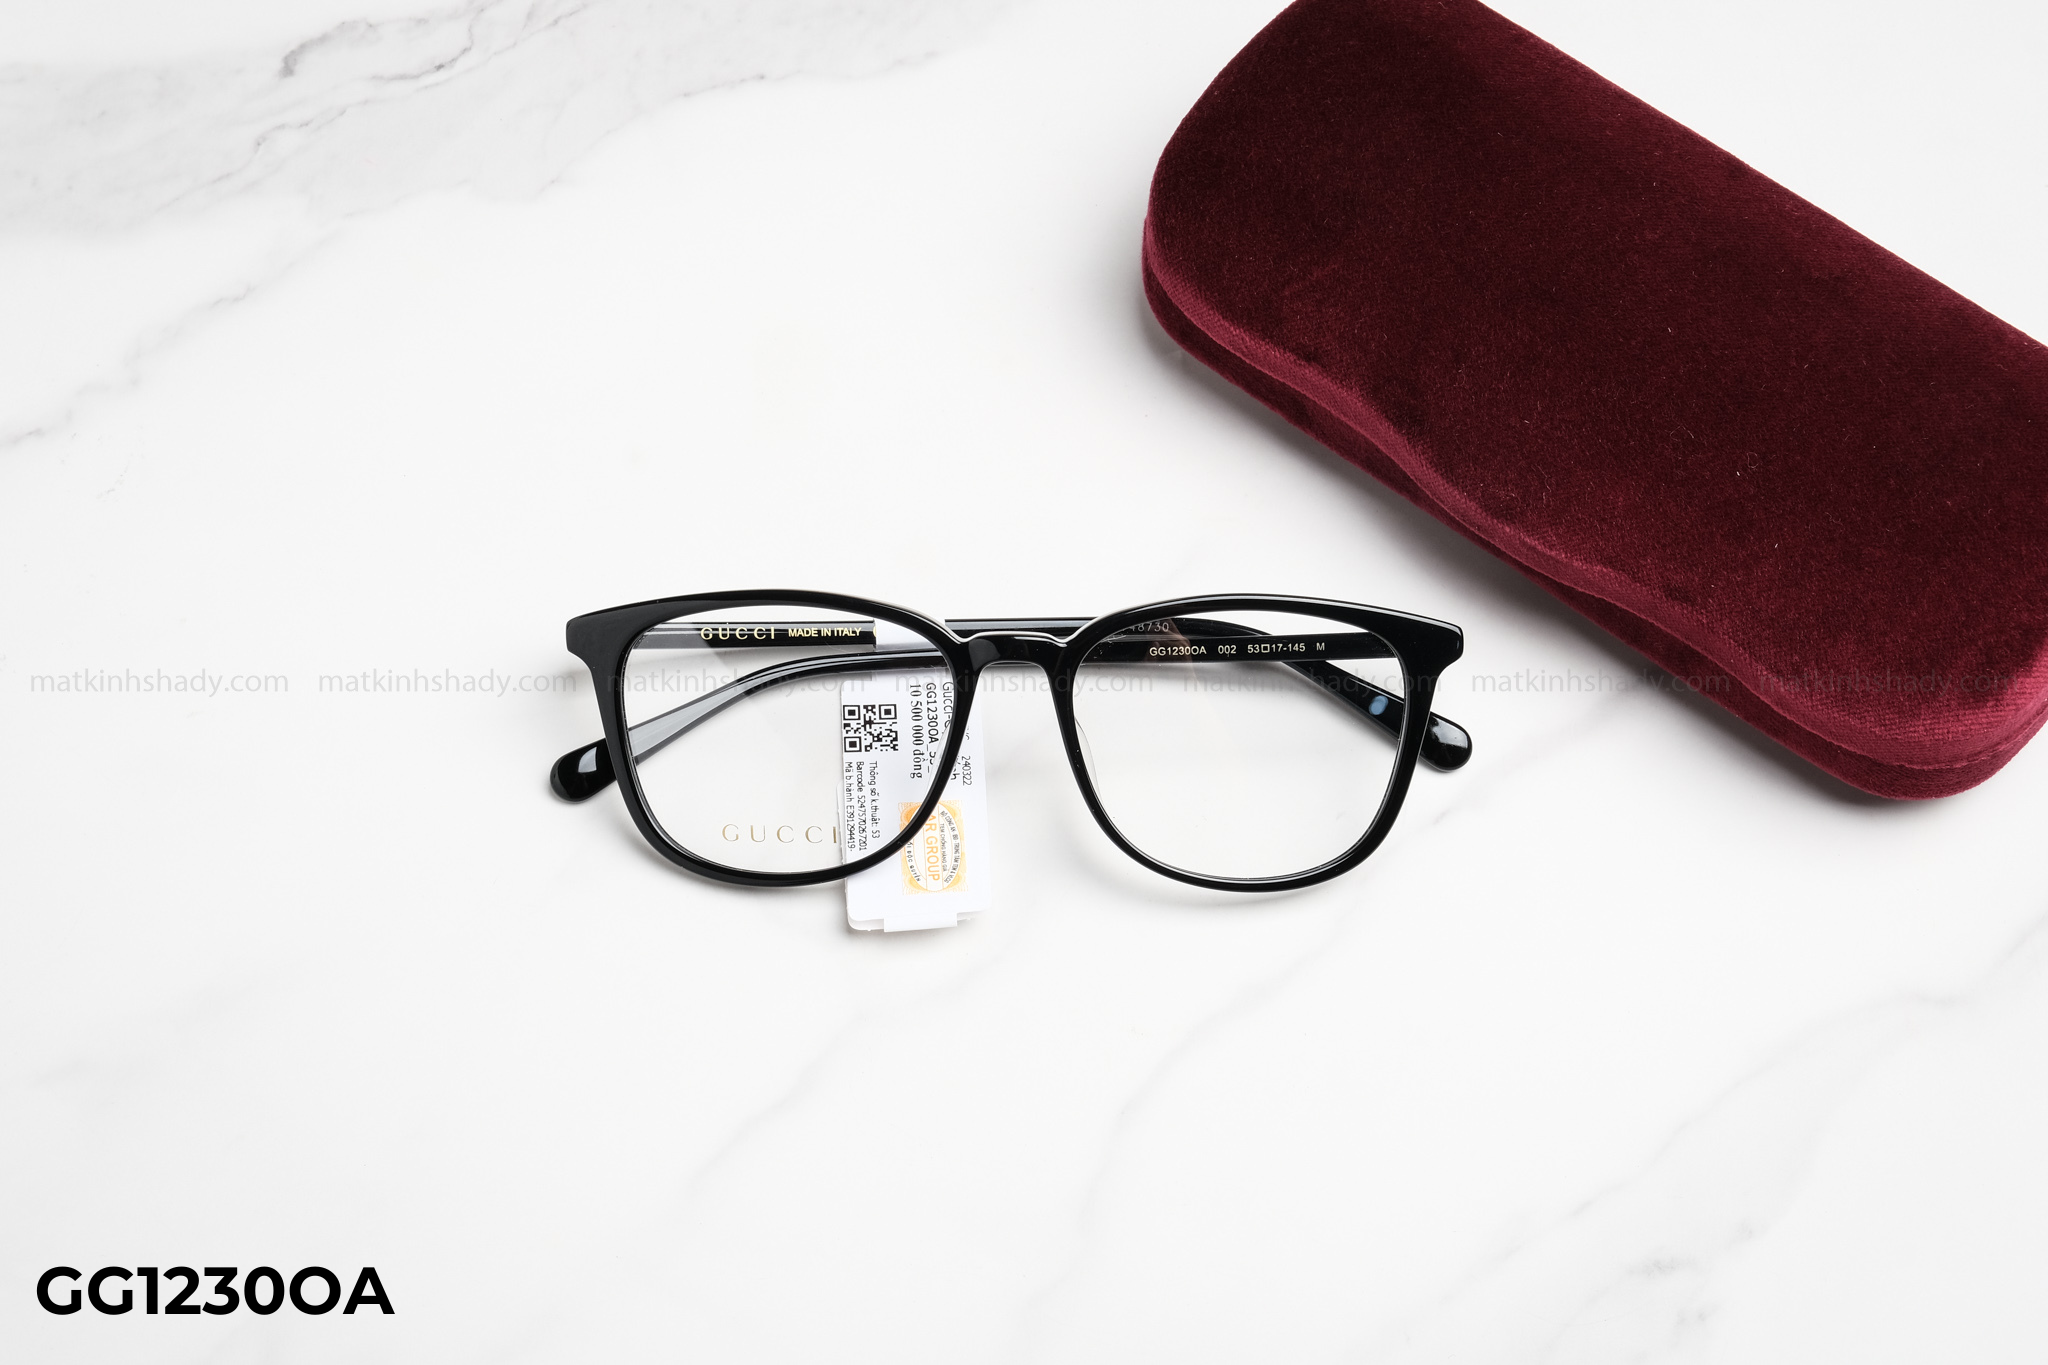  Gucci Eyewear - Glasses - GG1230OA 